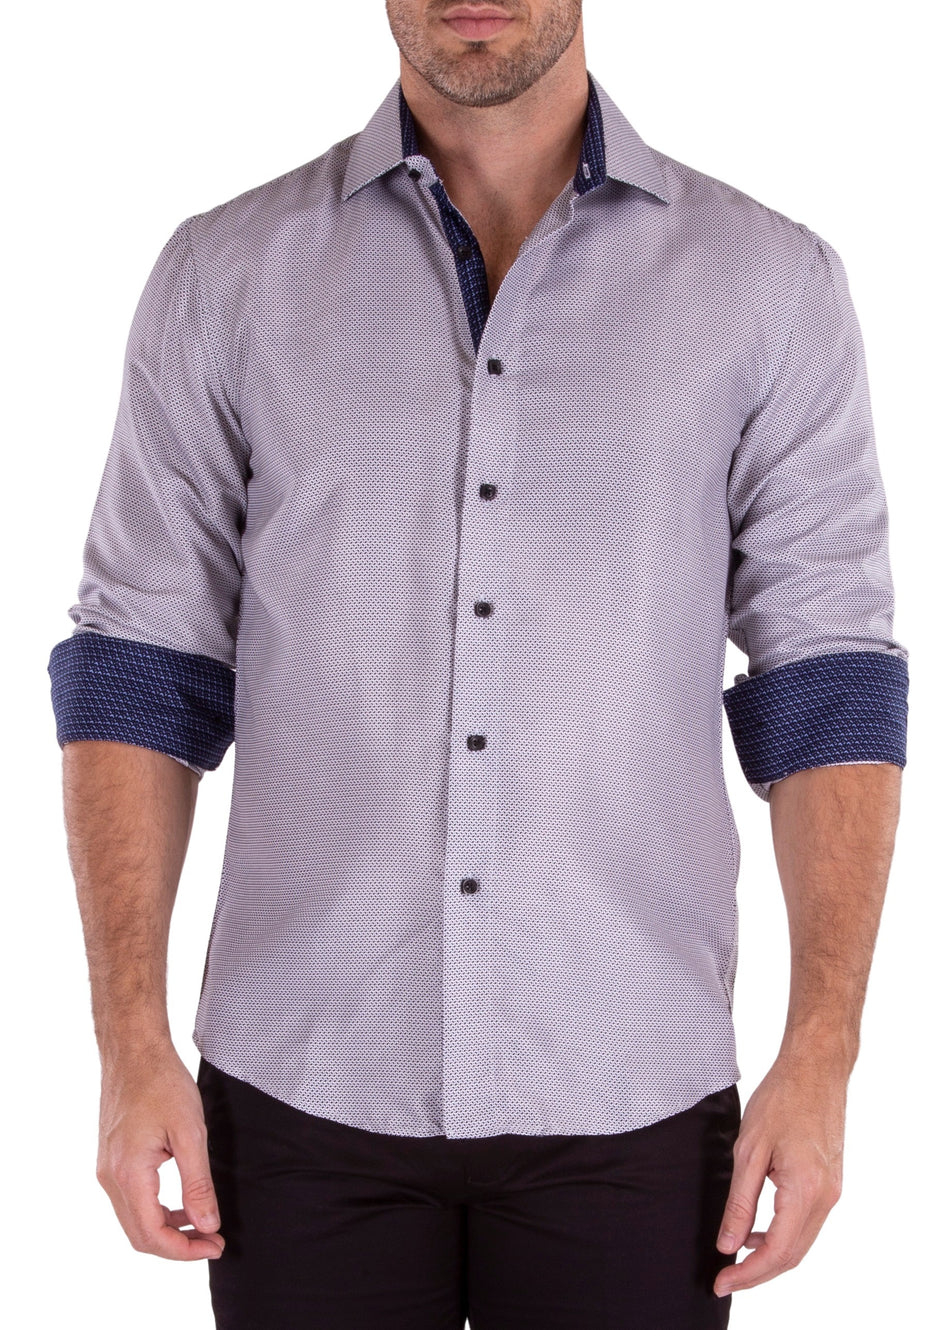 222332 - White Long Sleeve Shirt